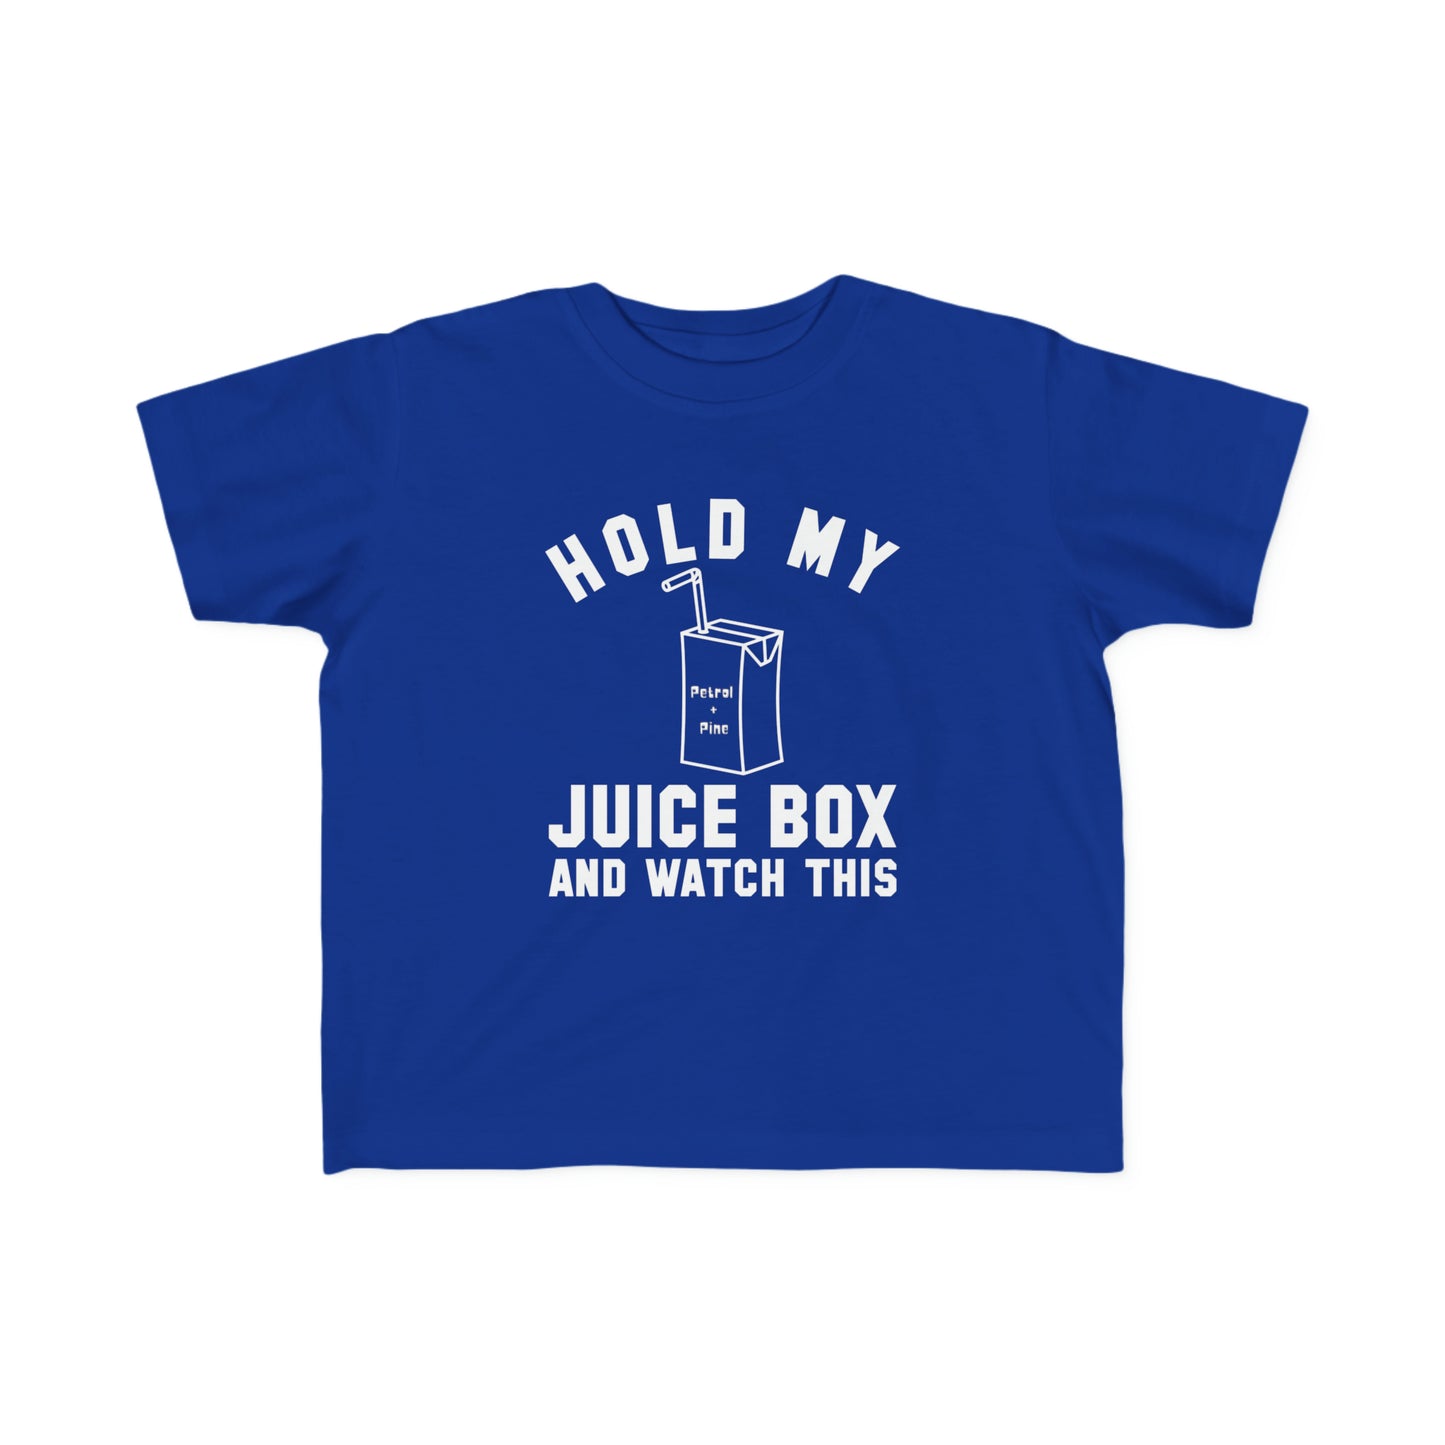 Hold My Juice Box - Toddler Tee